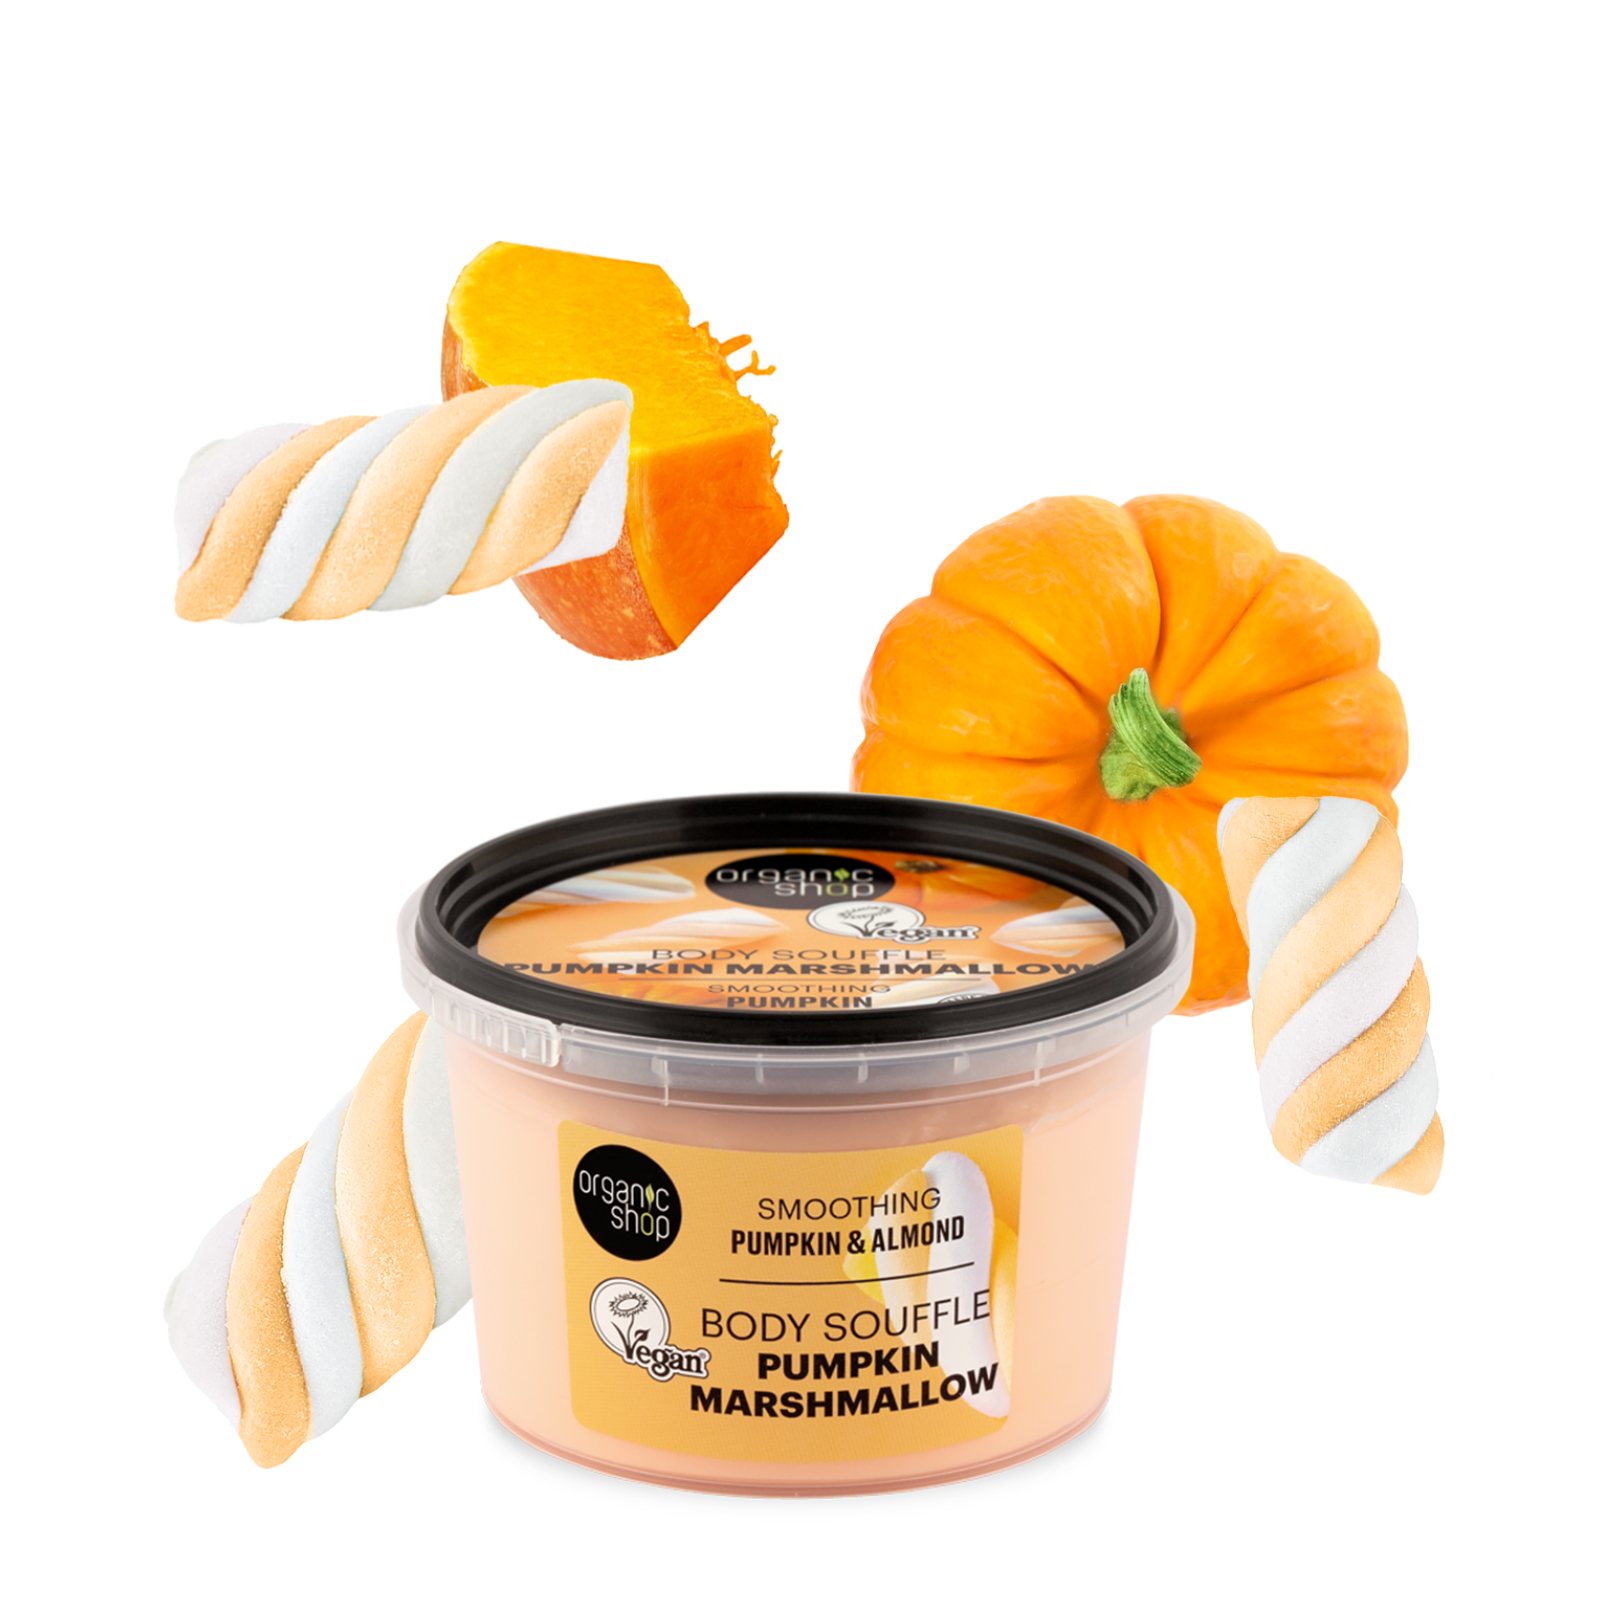 Organic Shop Pumpkin Marshmallow Smoothing Body Souffle Pumpkin & Almond (250ml)